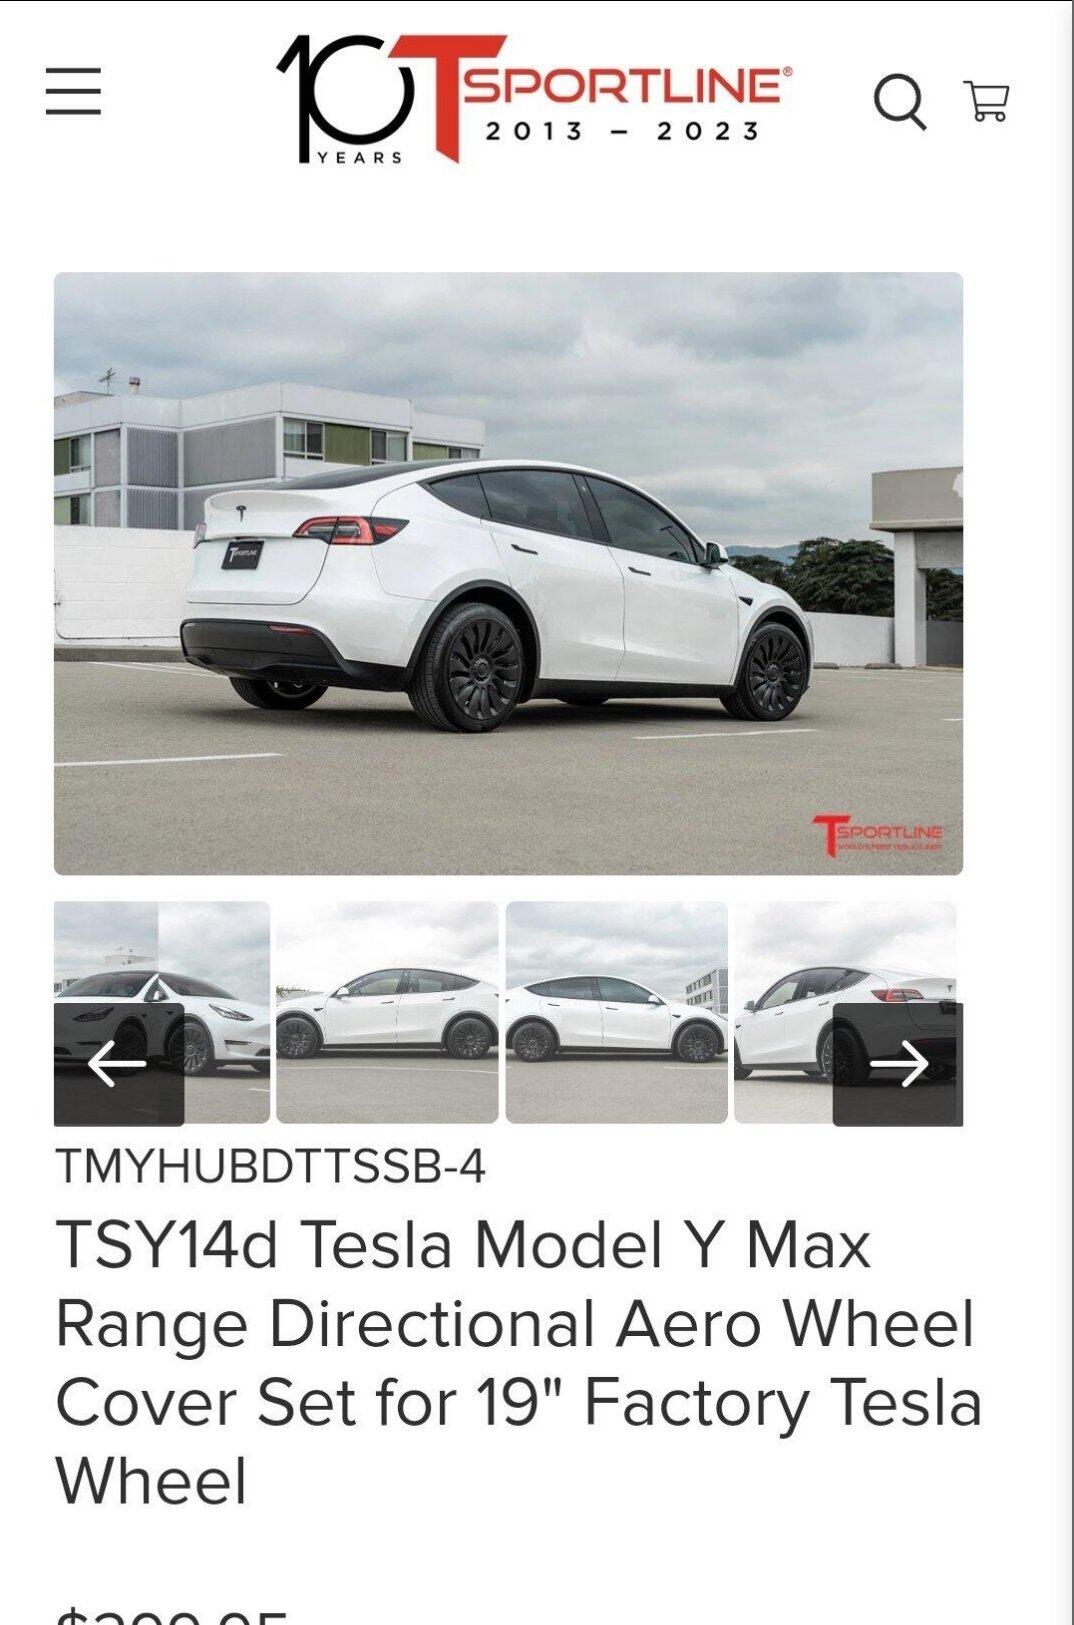 TSY14d Tesla Model Y Max Range Directional Aero Wheel Cover Set